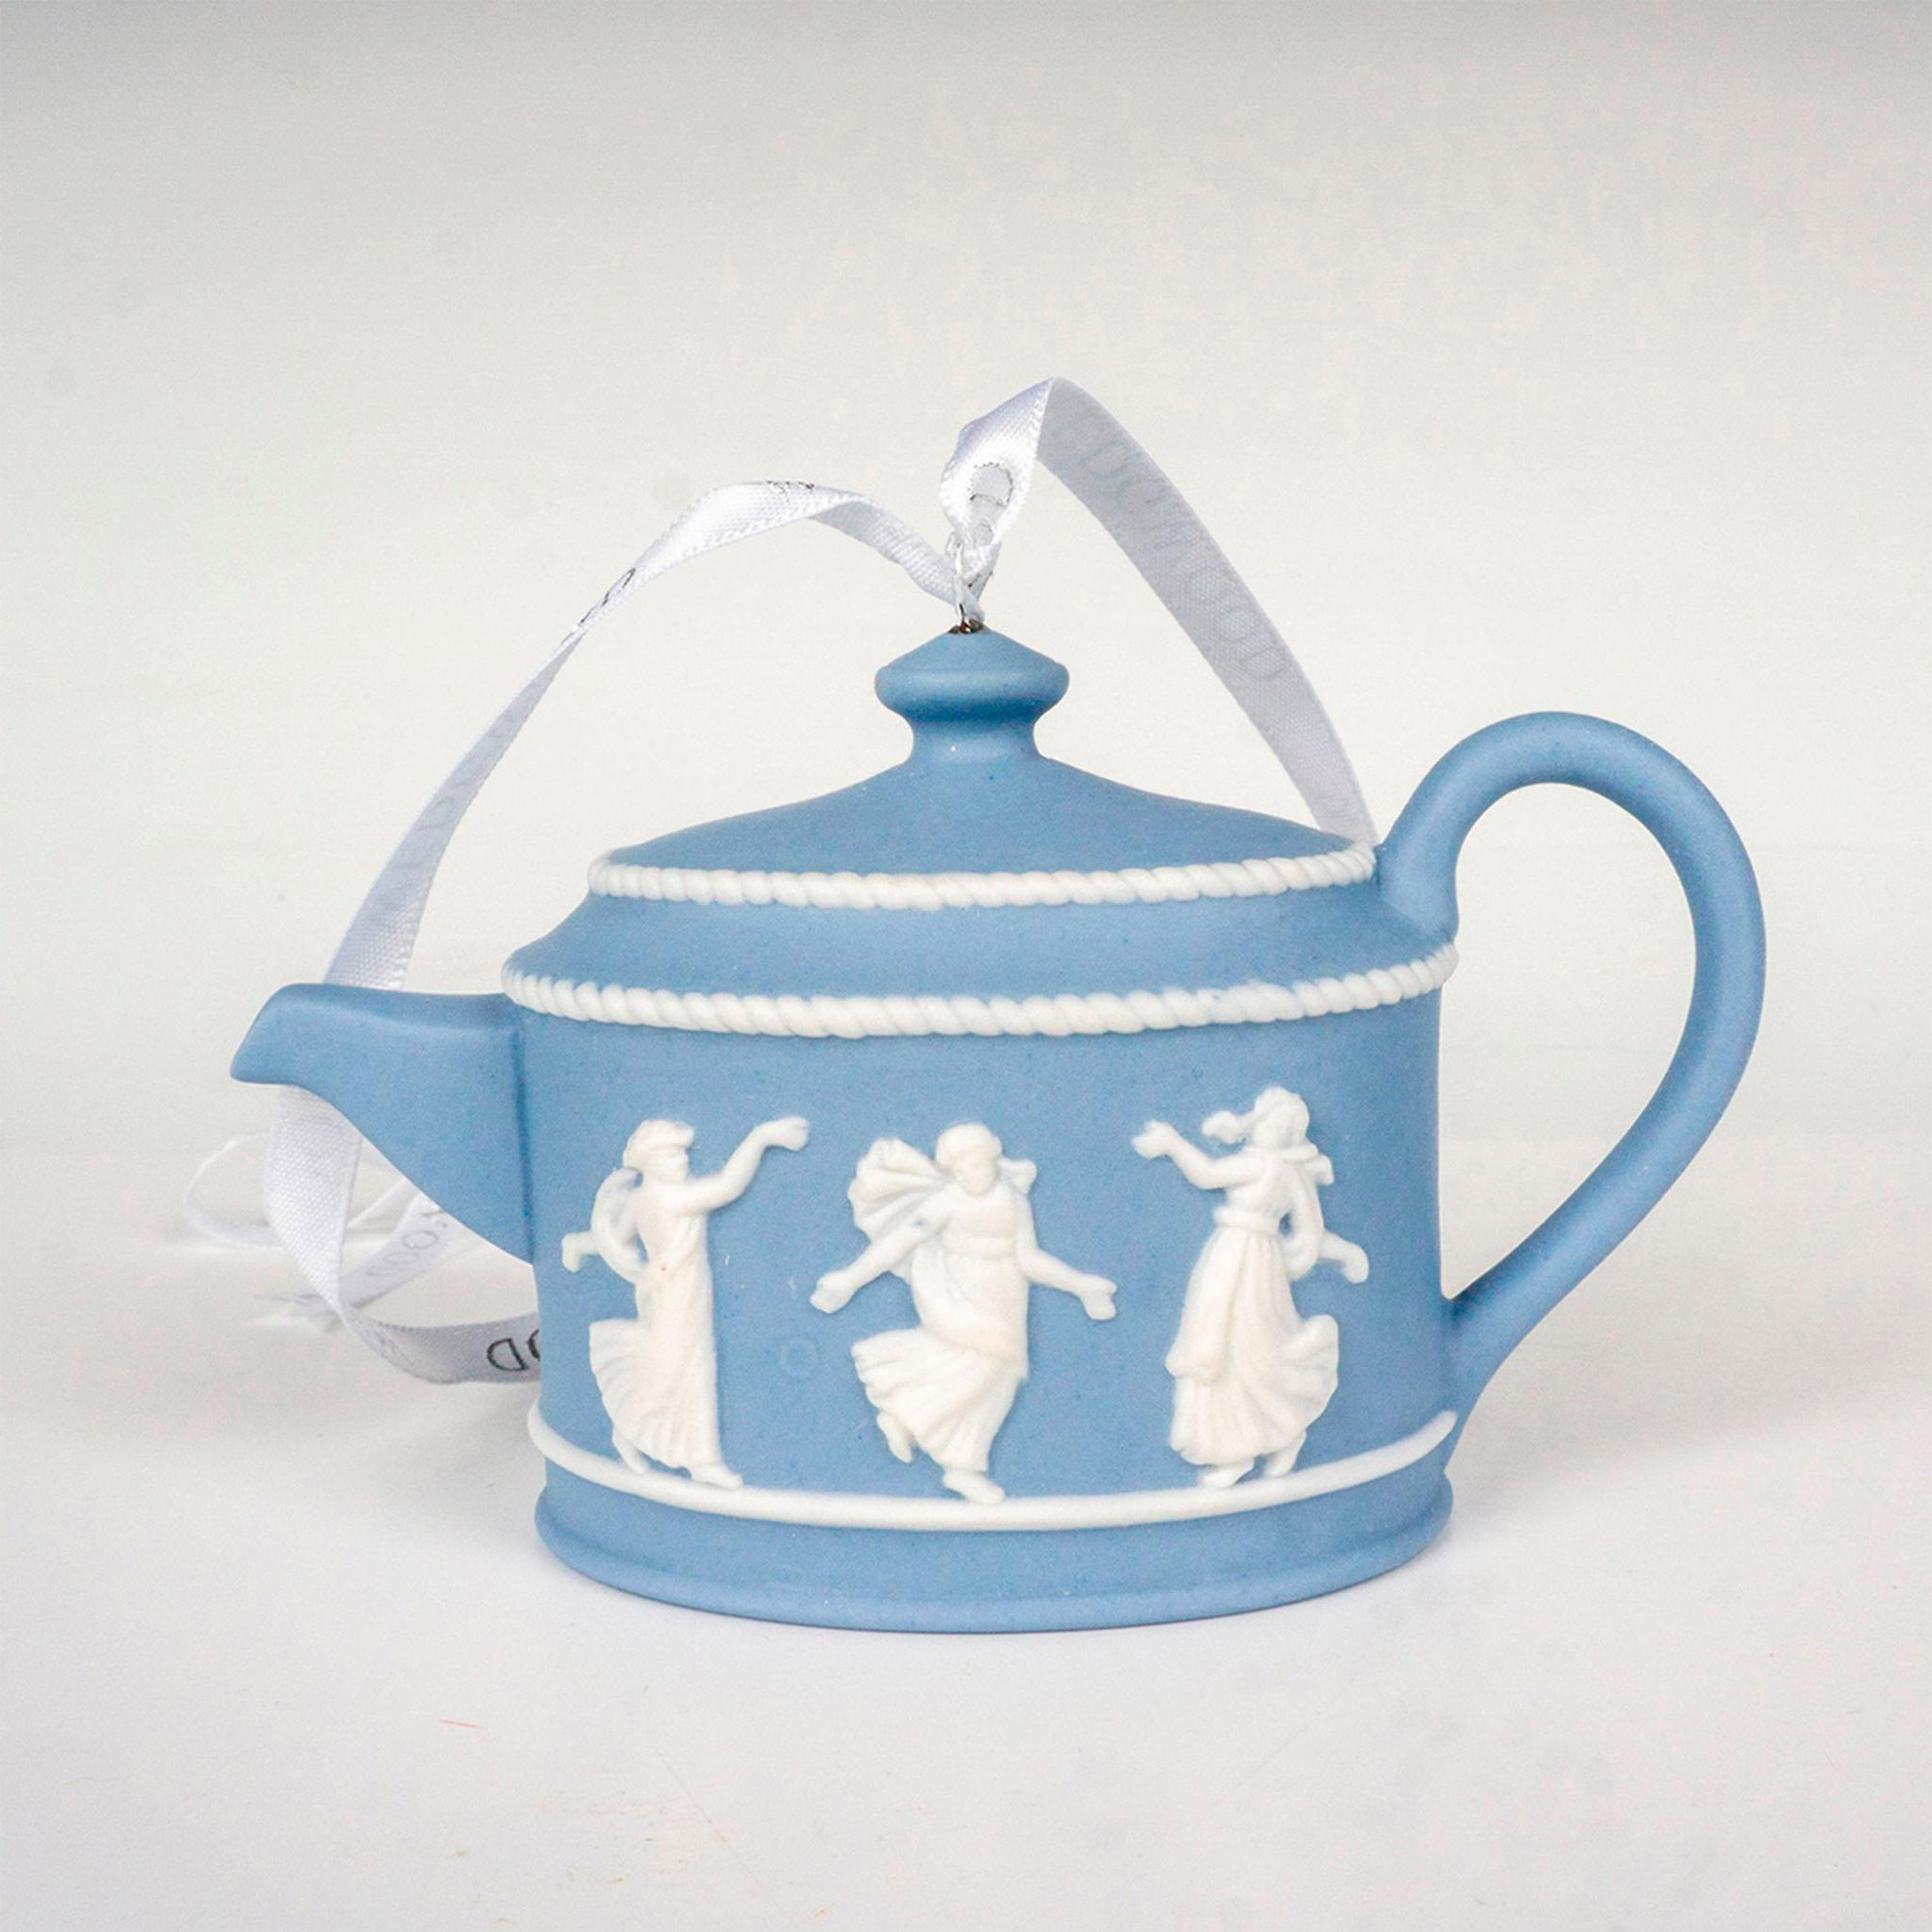 Wedgwood Jasperware Ornament, Teapot